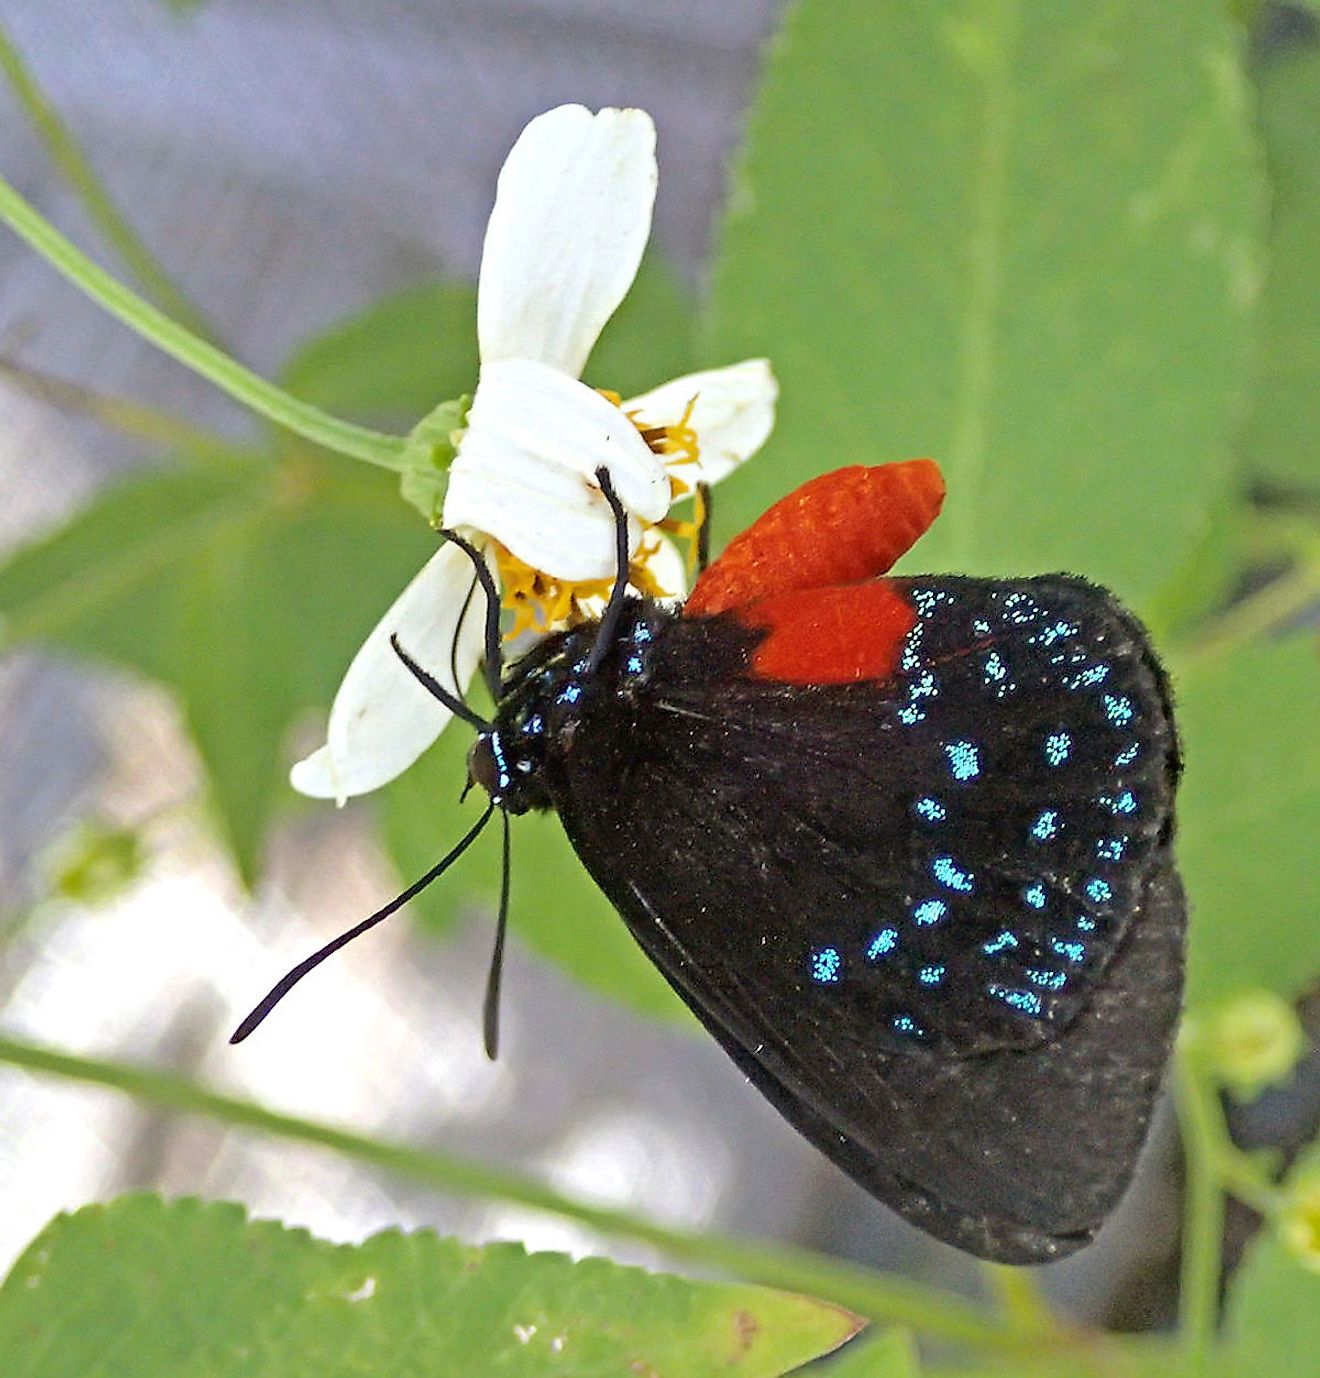 Atala hairstreak butterfly in Florida, USA. Image credit: James St. John/Wikimedia.org